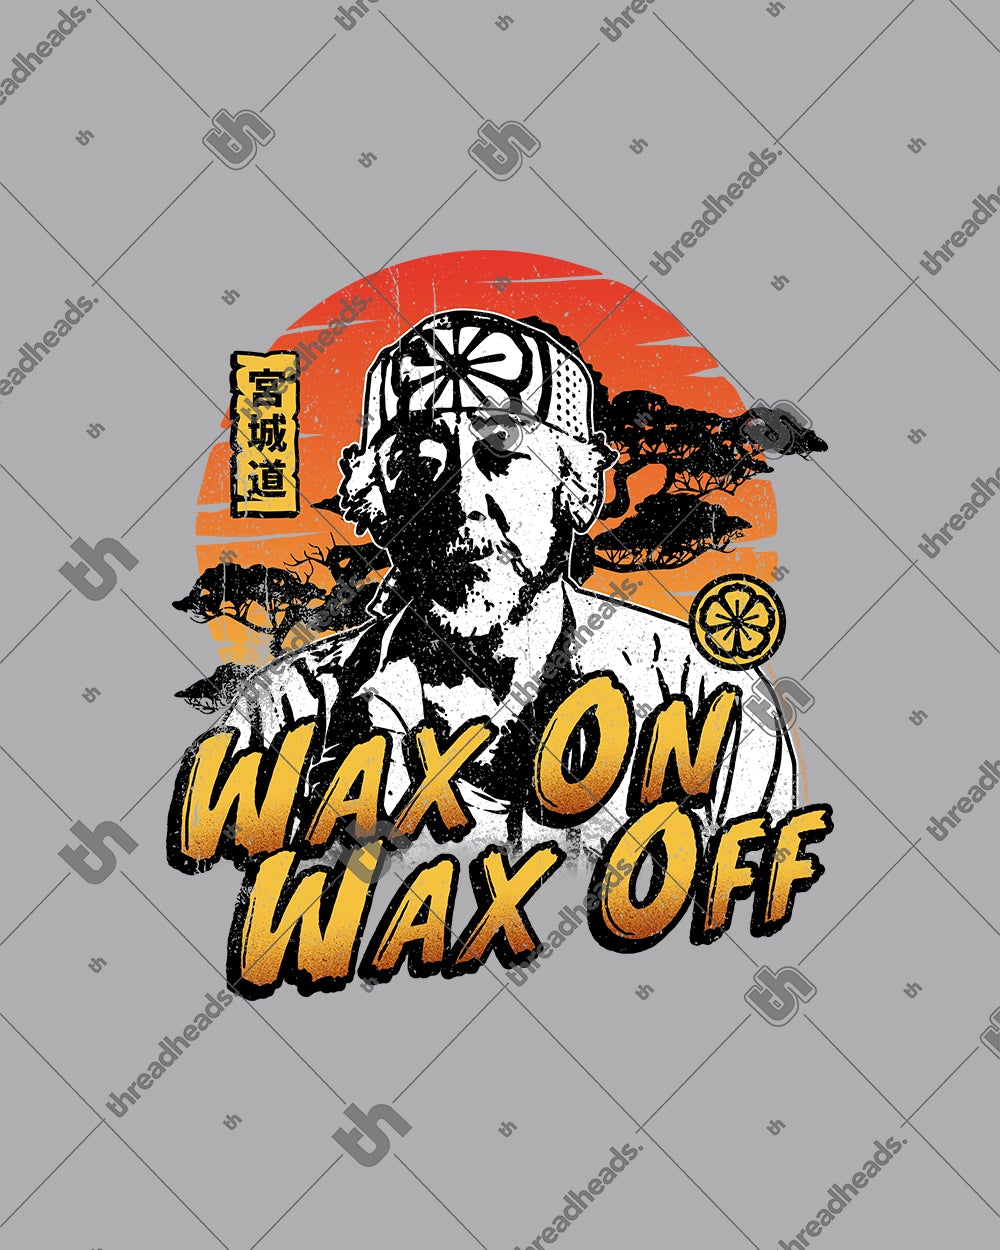 Wax On Wax Off Kids T-Shirt Australia Online #colour_grey